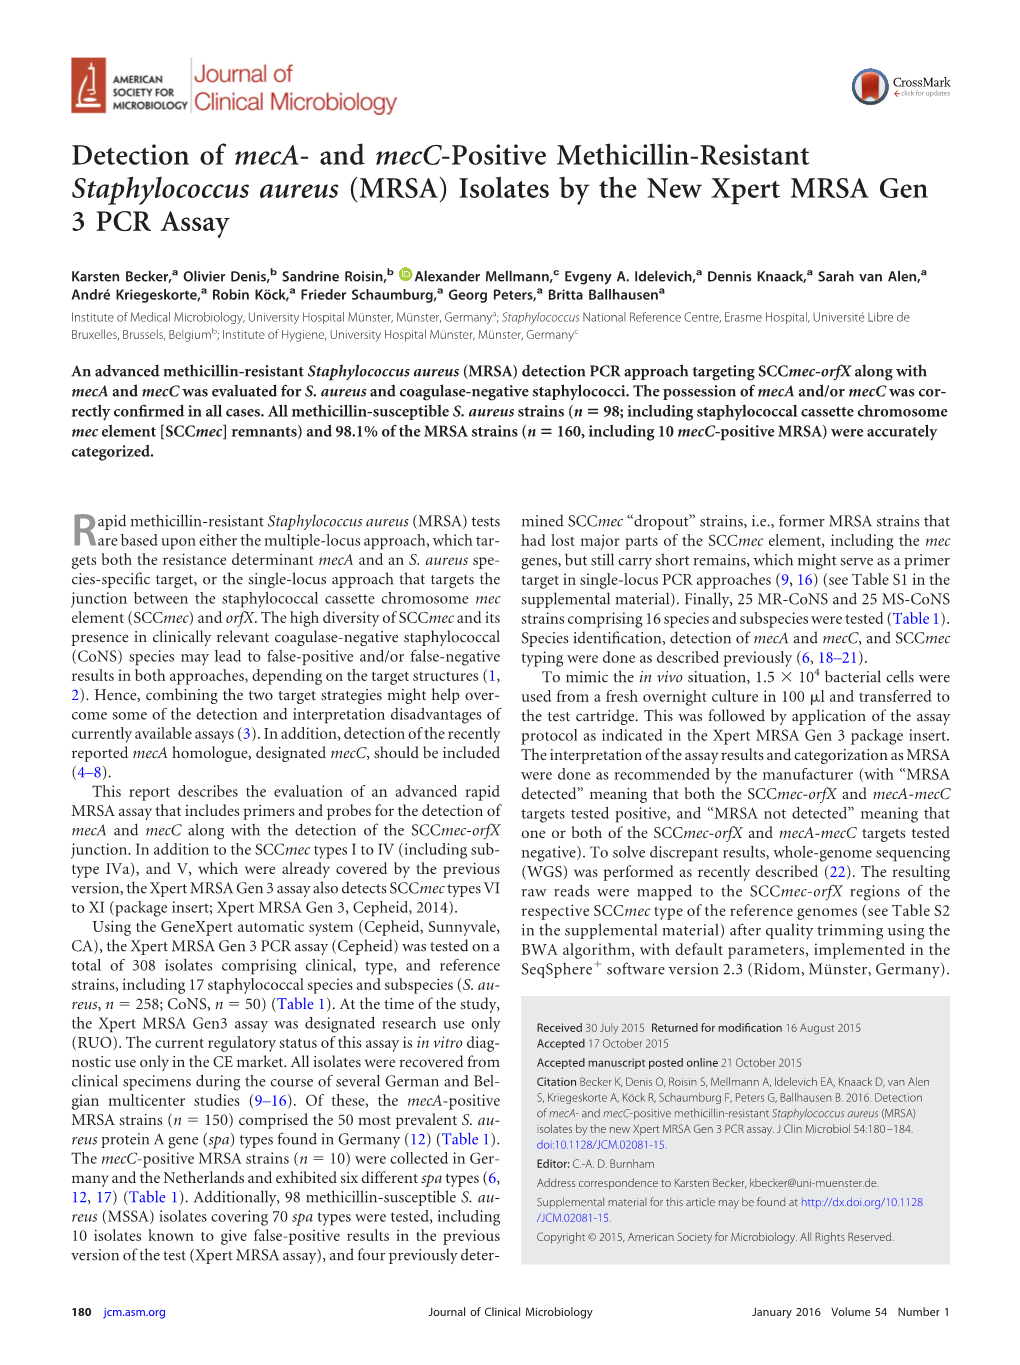 Isolates by the New Xpert MRSA Gen 3 PCR Assay